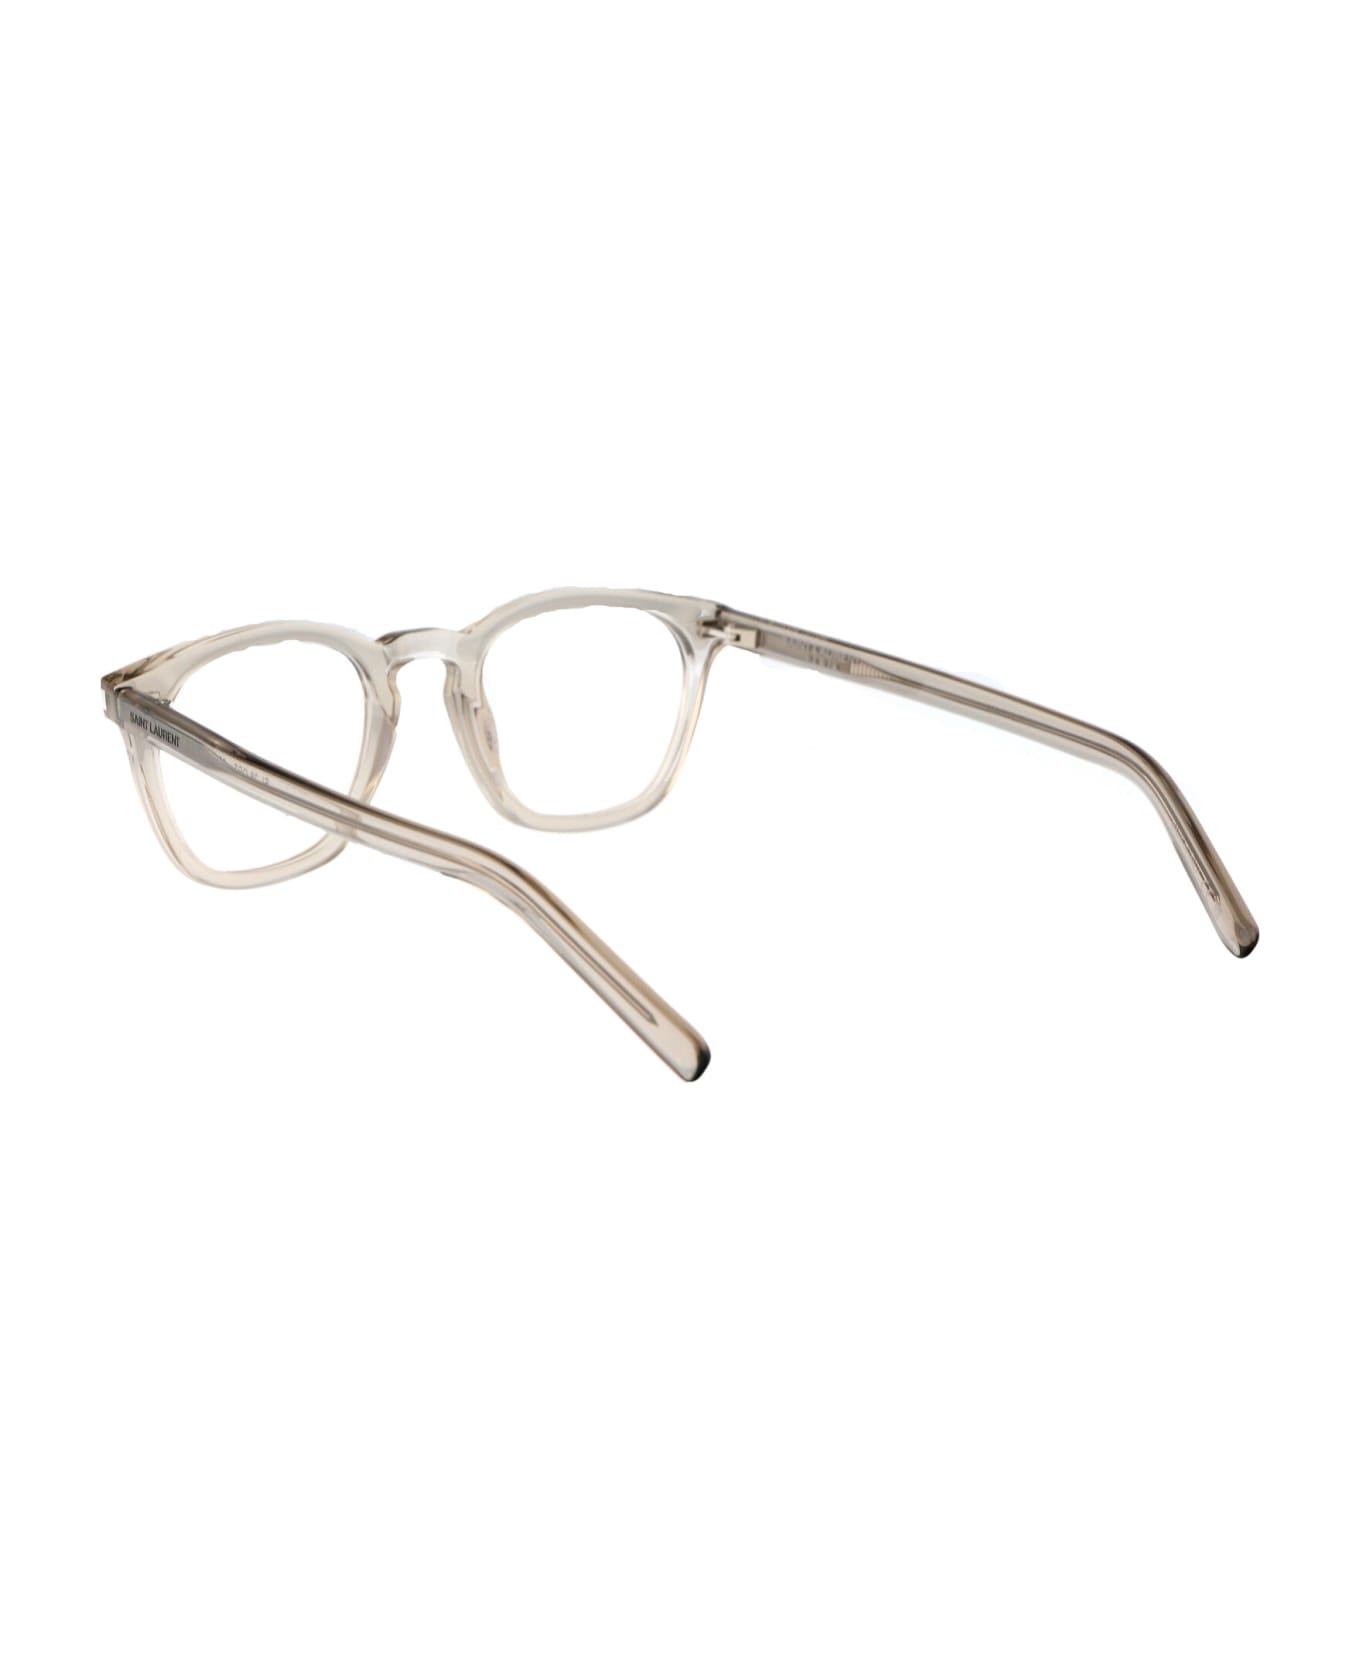 Saint Laurent Eyewear Sl 28 Opt Glasses - 005 BEIGE BEIGE TRANSPARENT